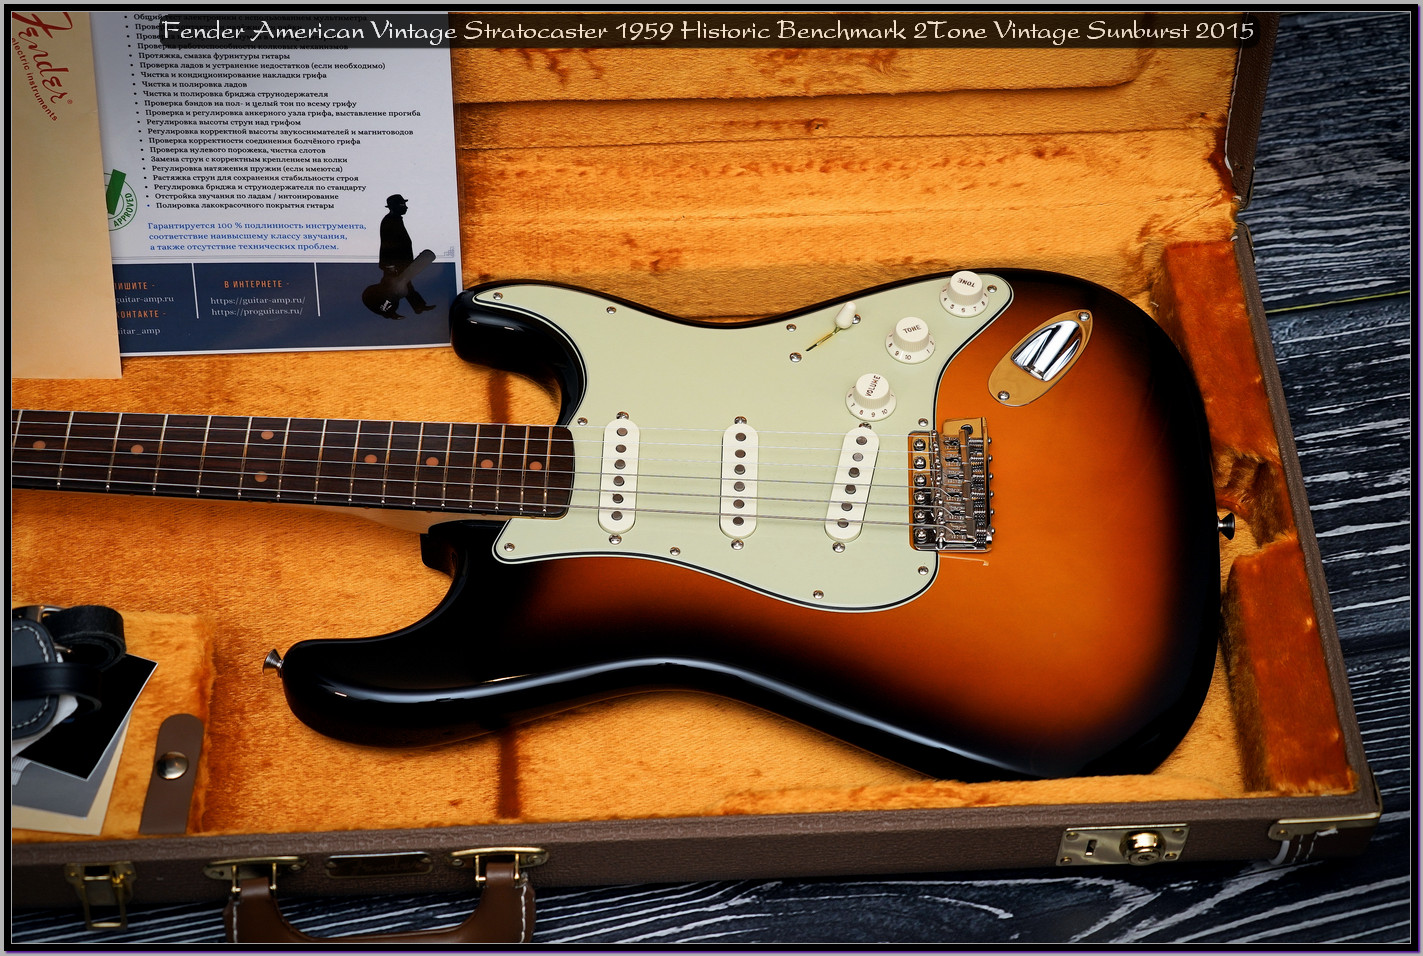 Fender American Vintage Stratocaster 1959 Historic Benchmark 2Tone Vintage Sunburst 2015 06_x1400.jpg